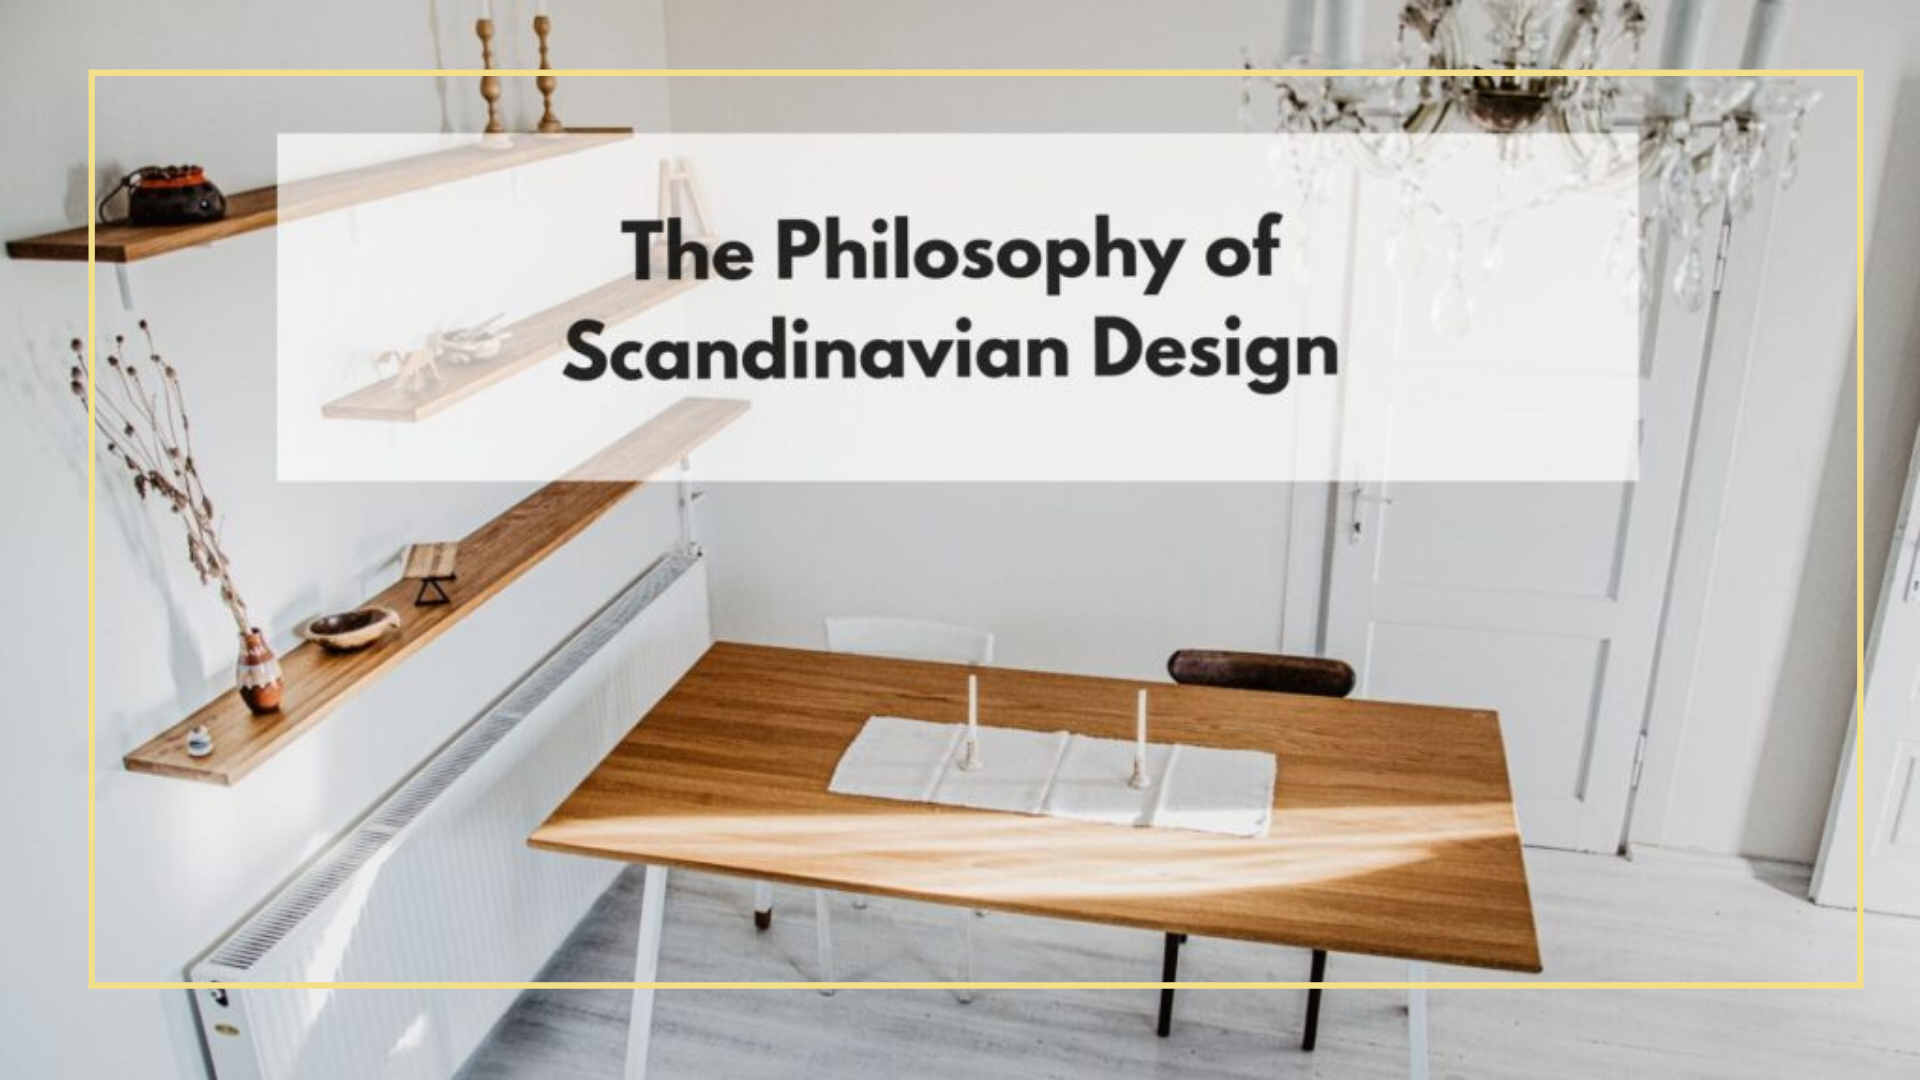 The philospohy of scandinavian design